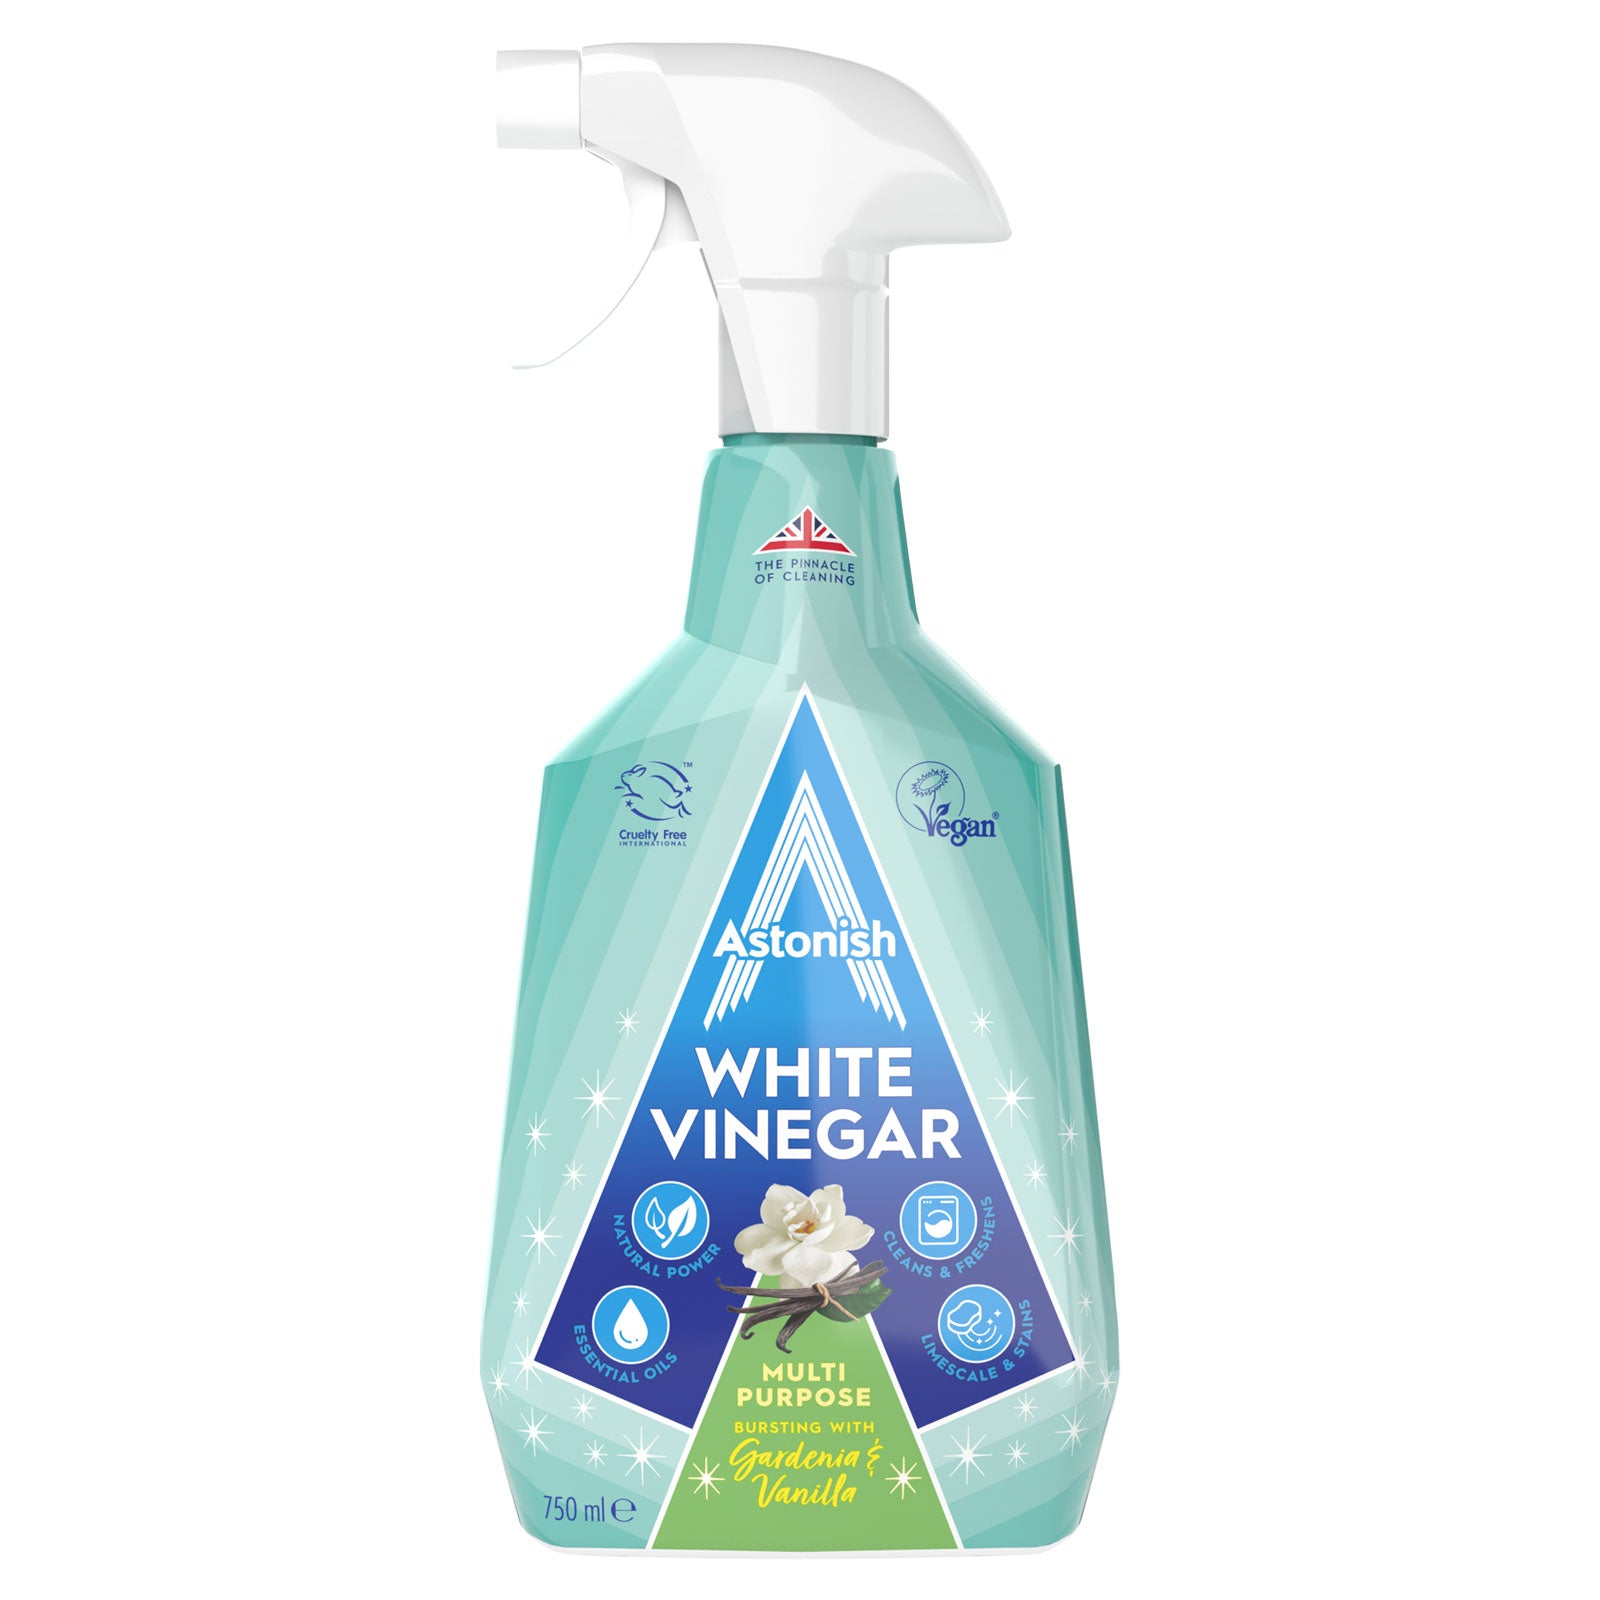 Ashtonish White Vinegar  Multi Purpose750ml